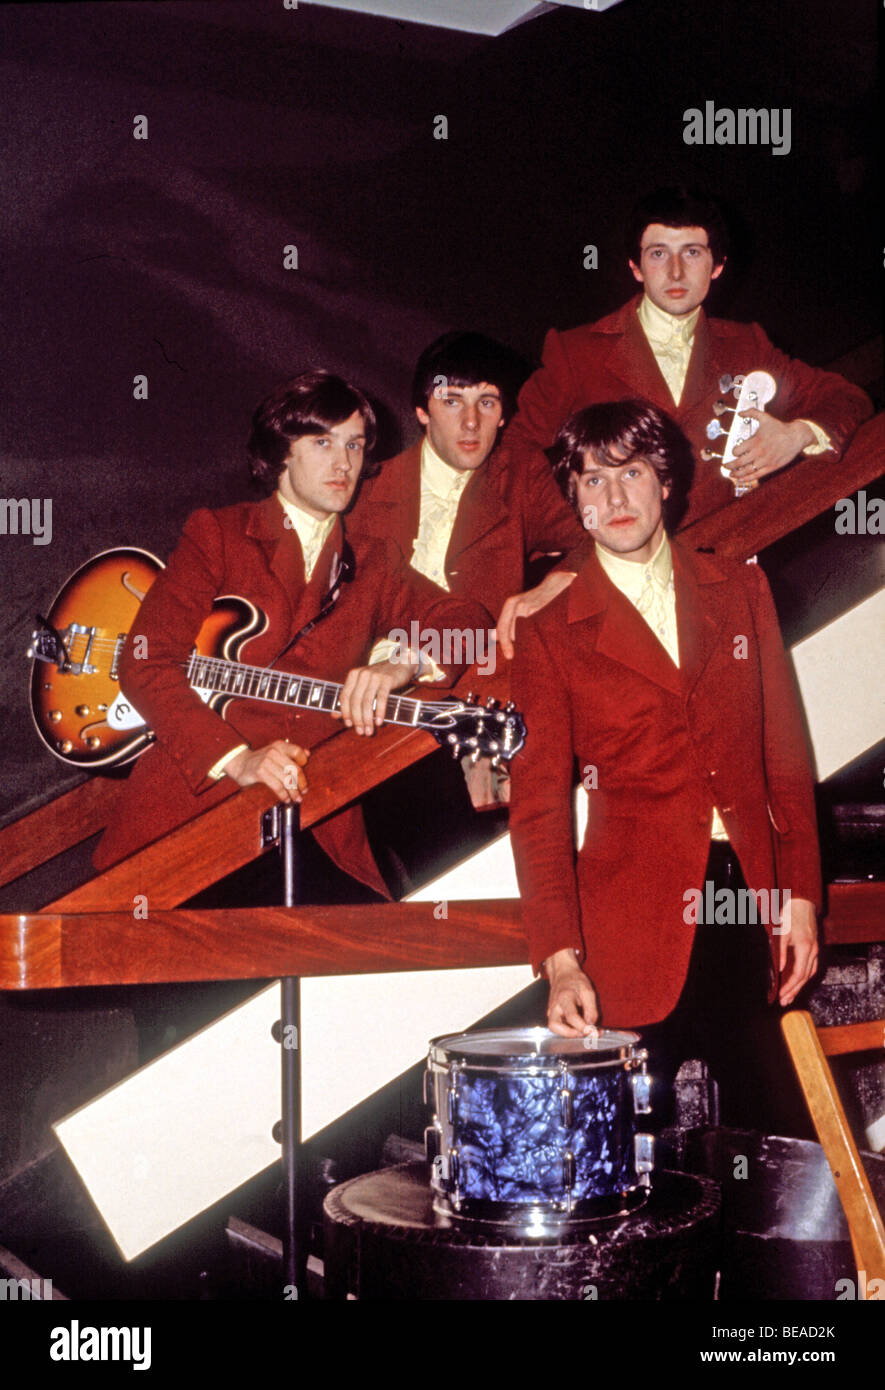 KINKS - britische Popgruppe 1964 von links: Dave Davies, Mick Avory, Ray Davies, Peter Quaize. Foto: Tony Gale Stockfoto